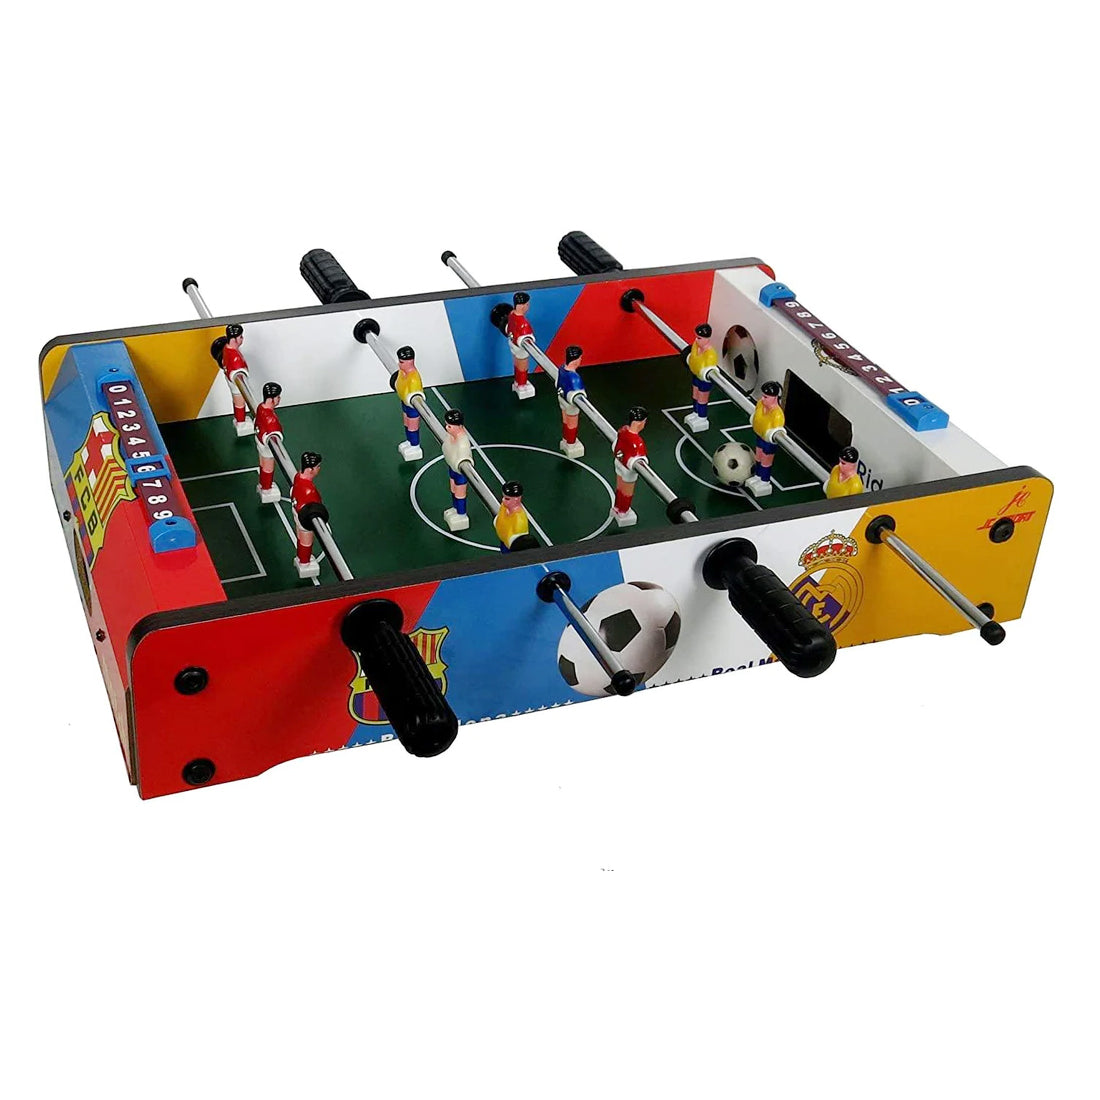 Prokick Mid-Sized Foosball, Mini Football, Table Soccer Game (51 Cms) - Best Price online Prokicksports.com